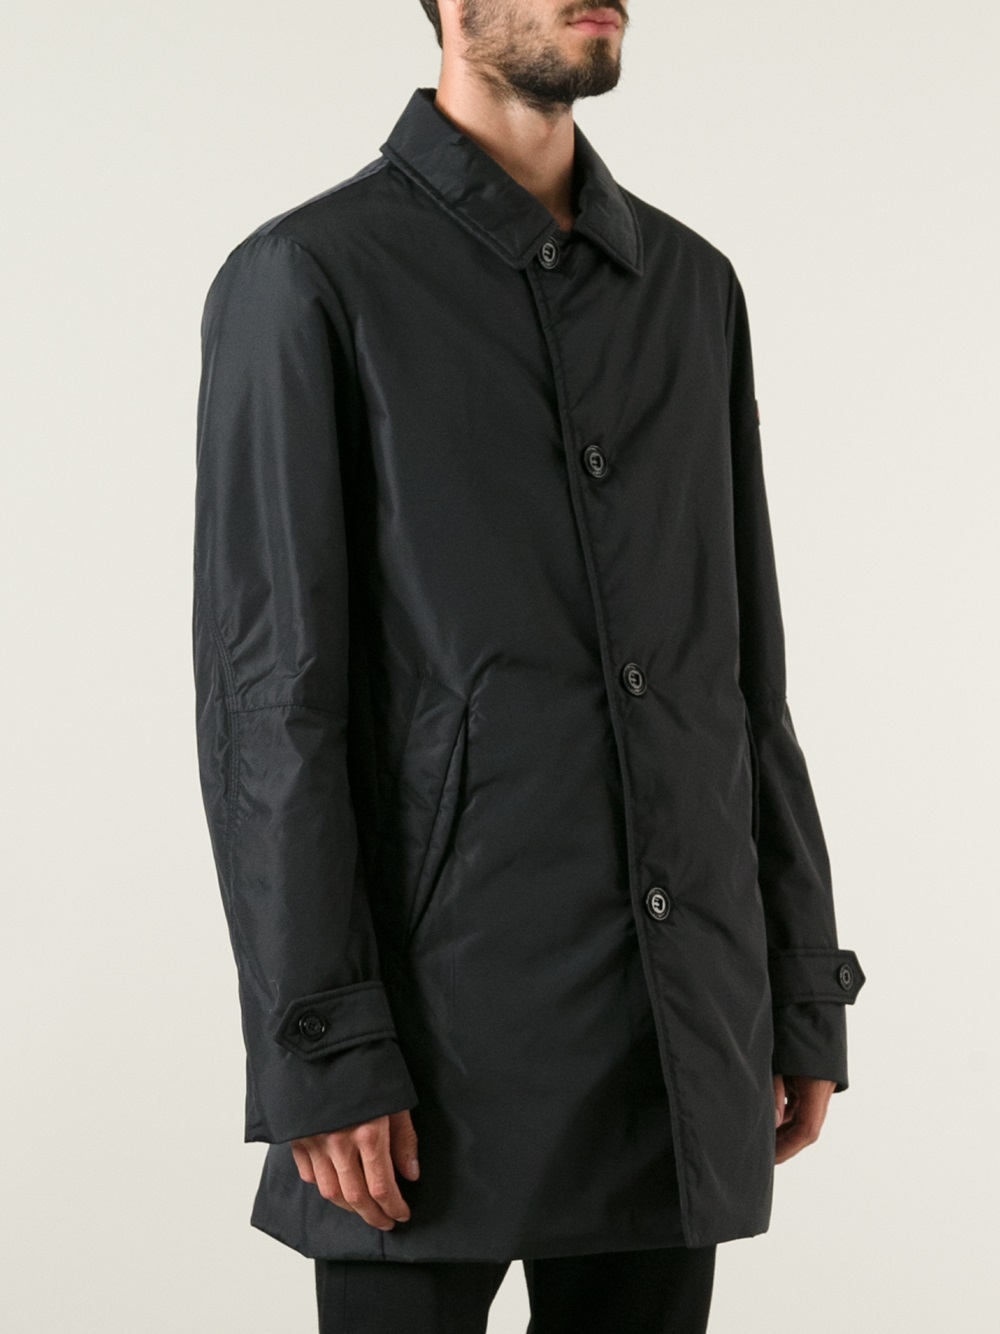 Lyst - Peuterey Rain Coat in Black for Men